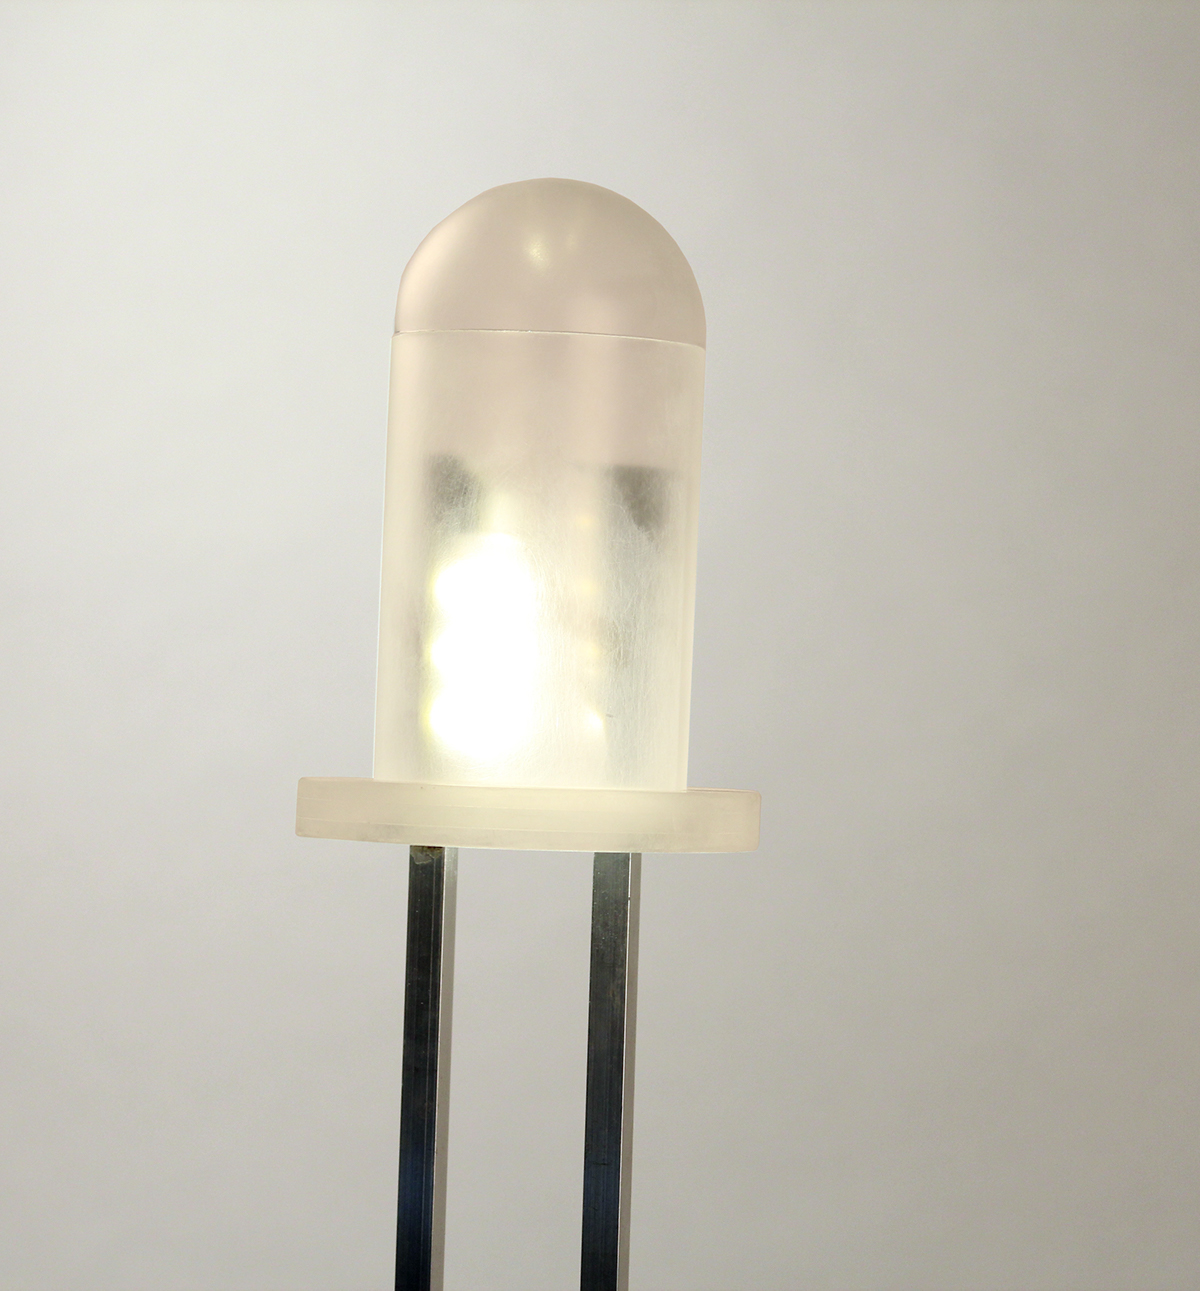 giovanni busetti diodo led light design made in italy